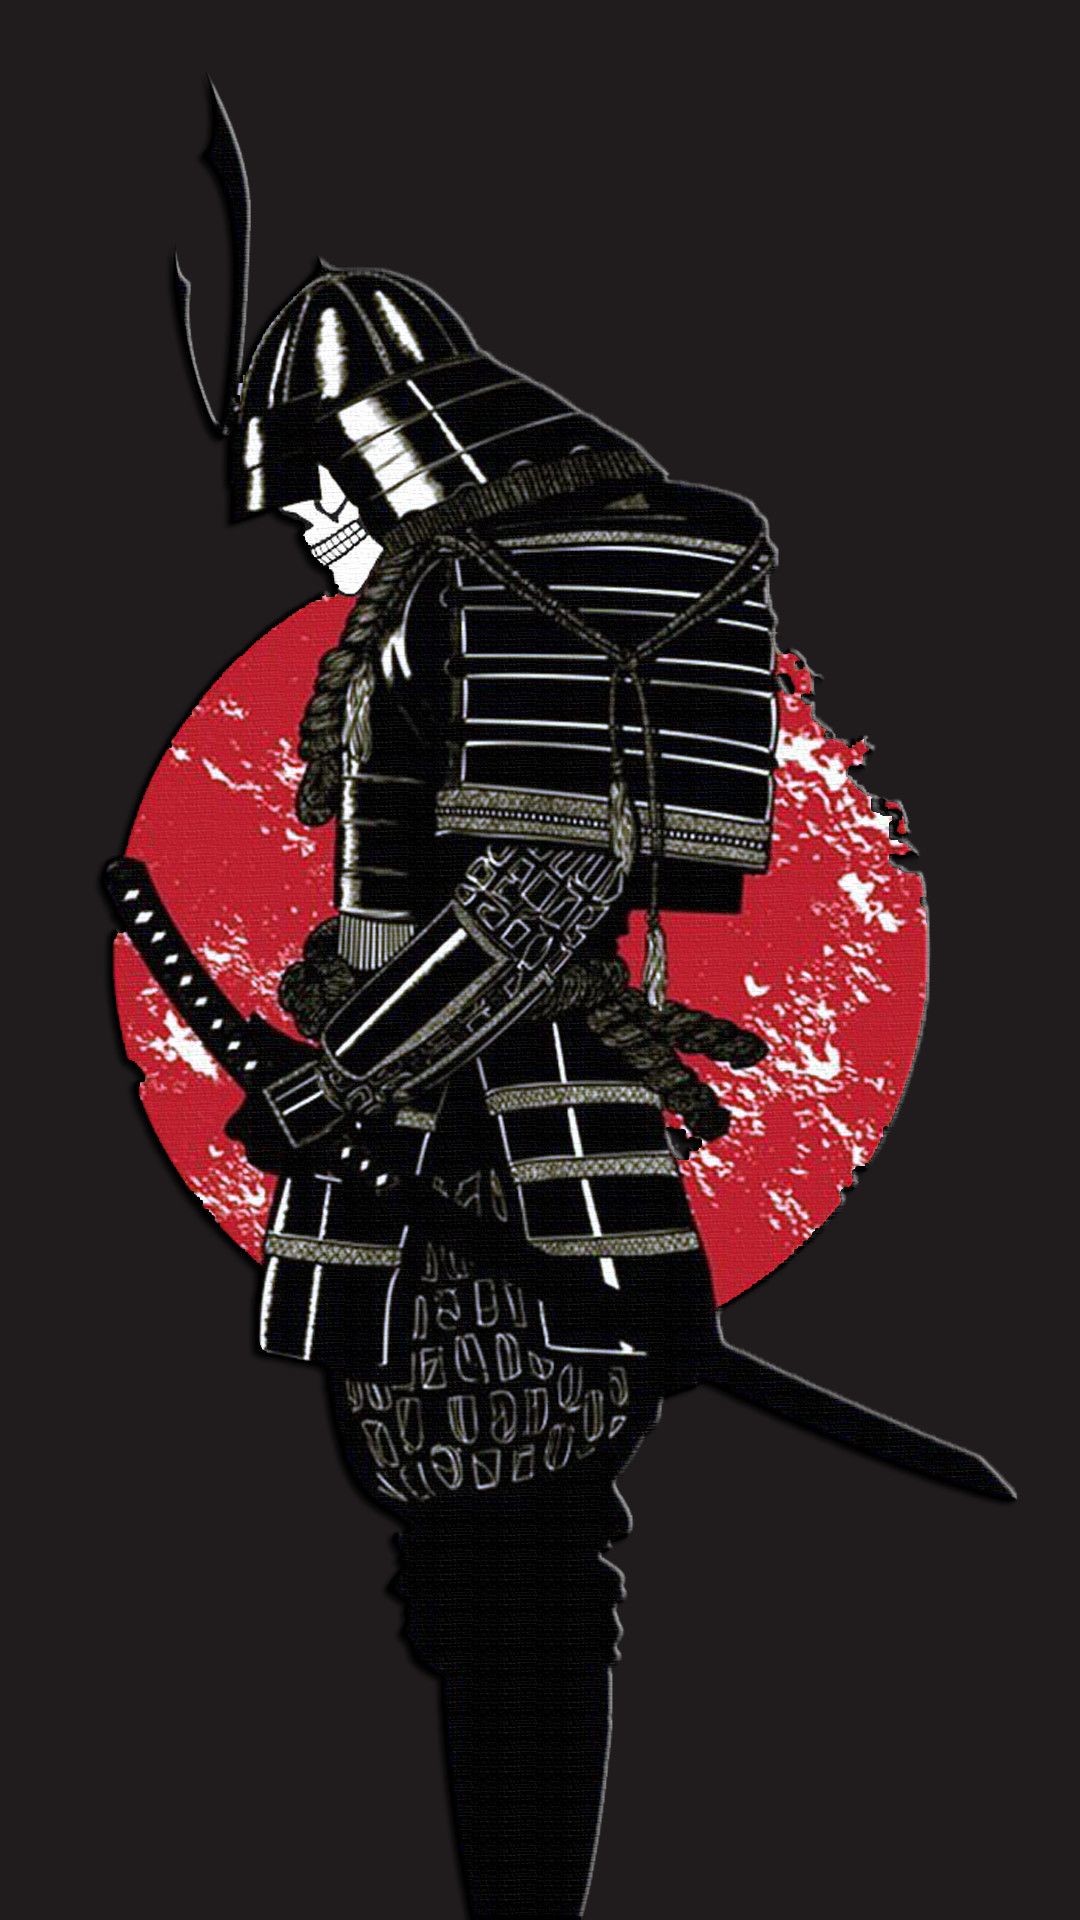 Samurai iphone wallpaper ideas. samurai wallpaper, samurai, samurai art